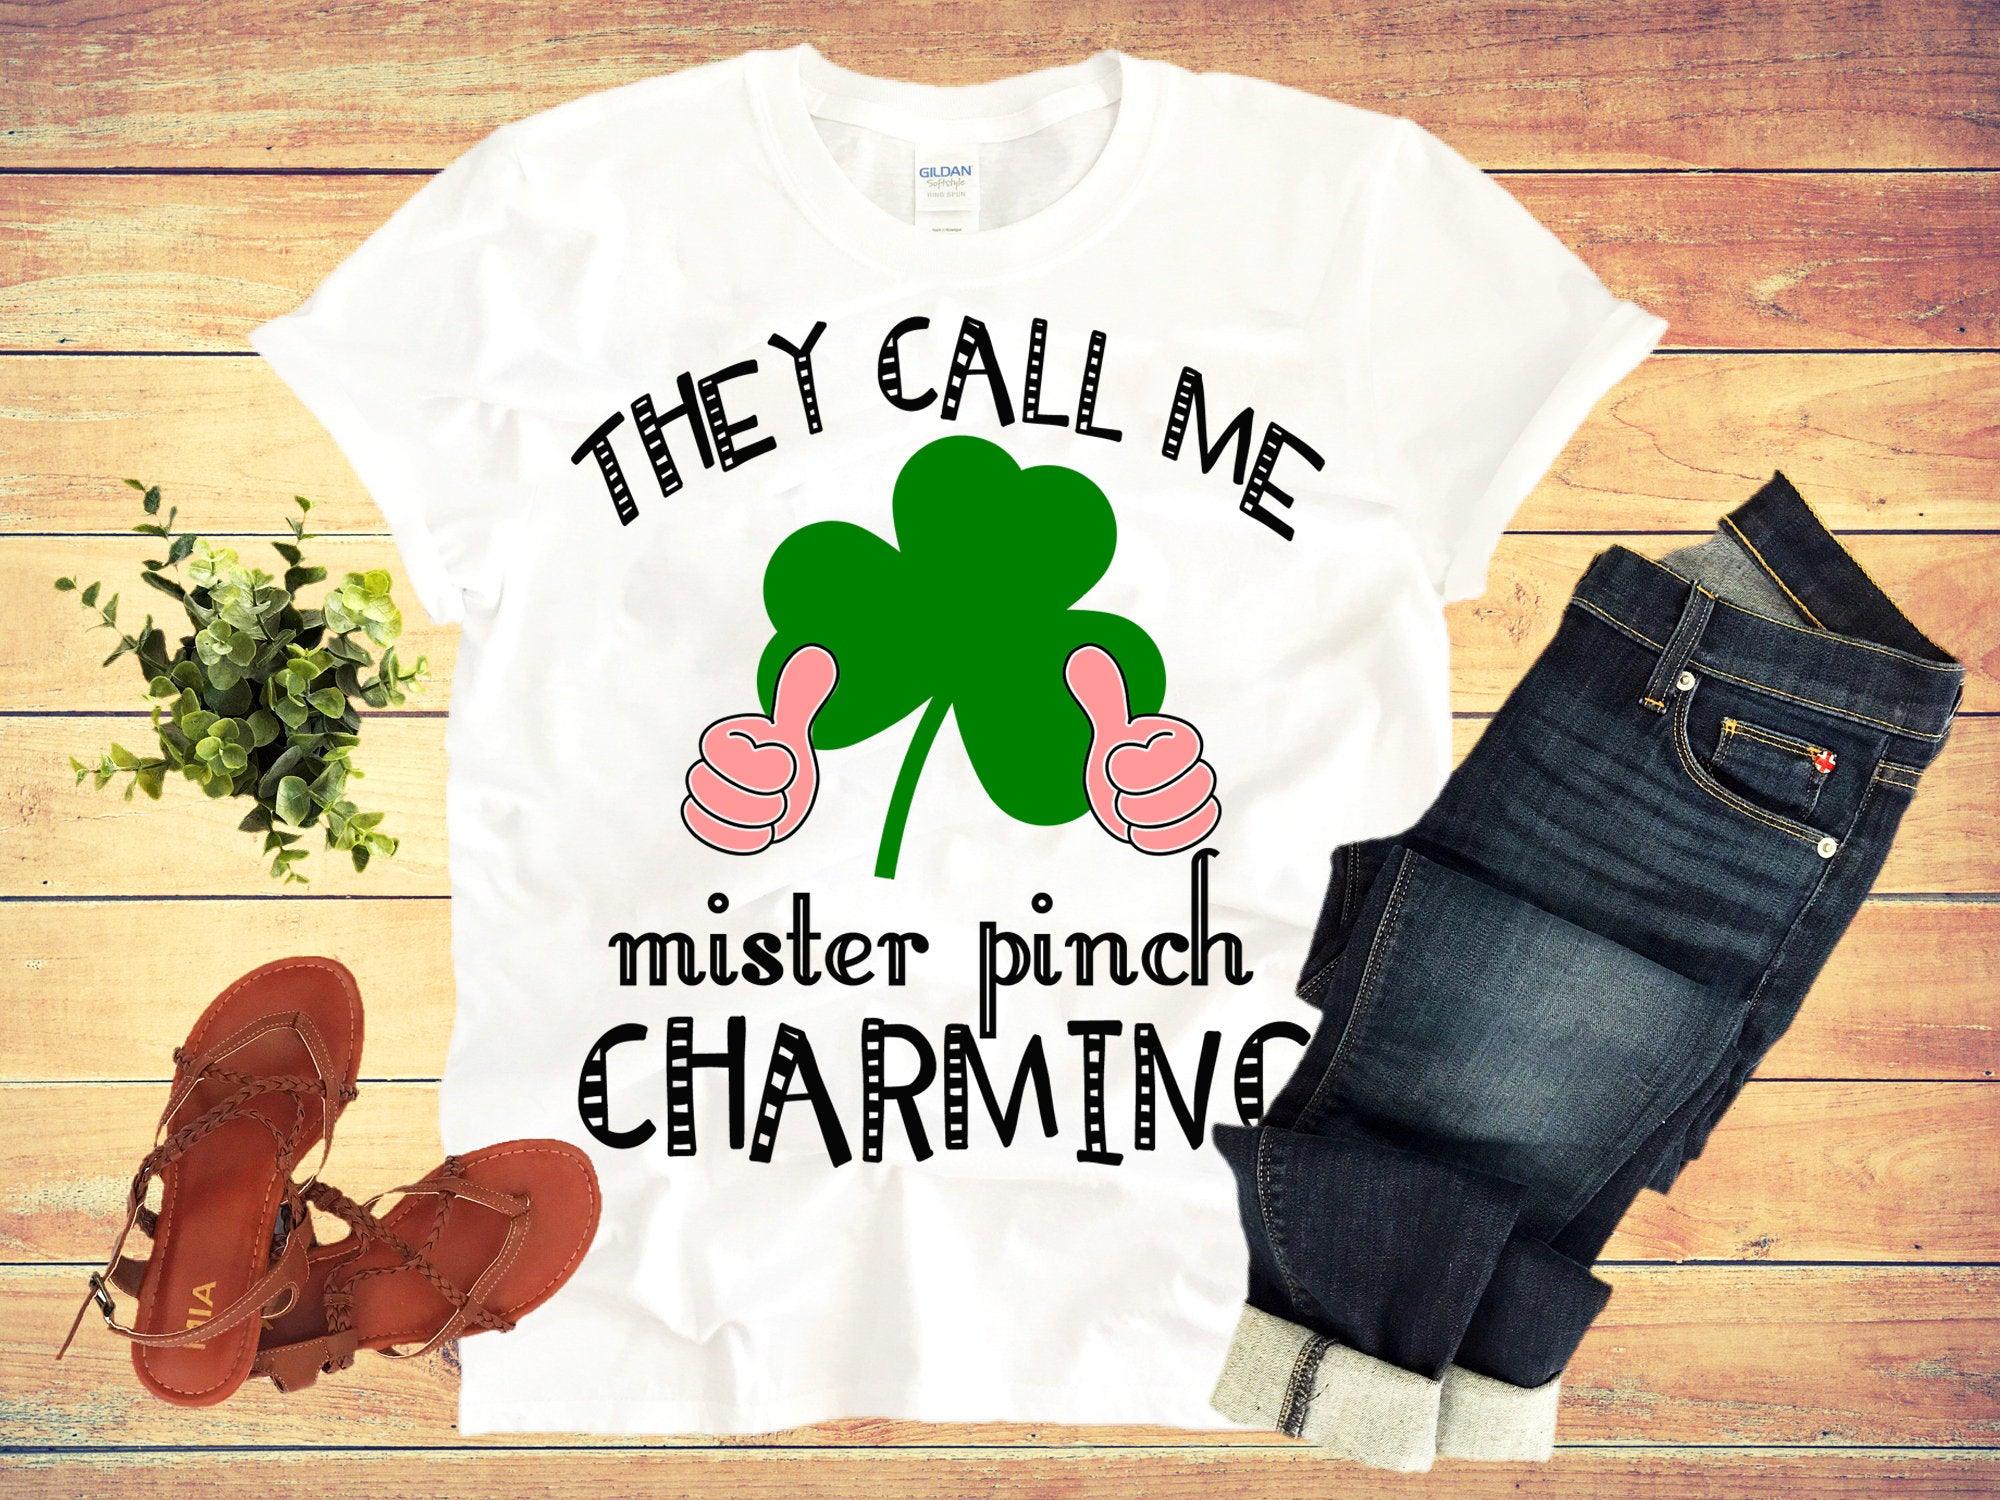 Ze noemen me Pinch Mister Charming, St. Patrick's Day T-shirts - plusminusco.com